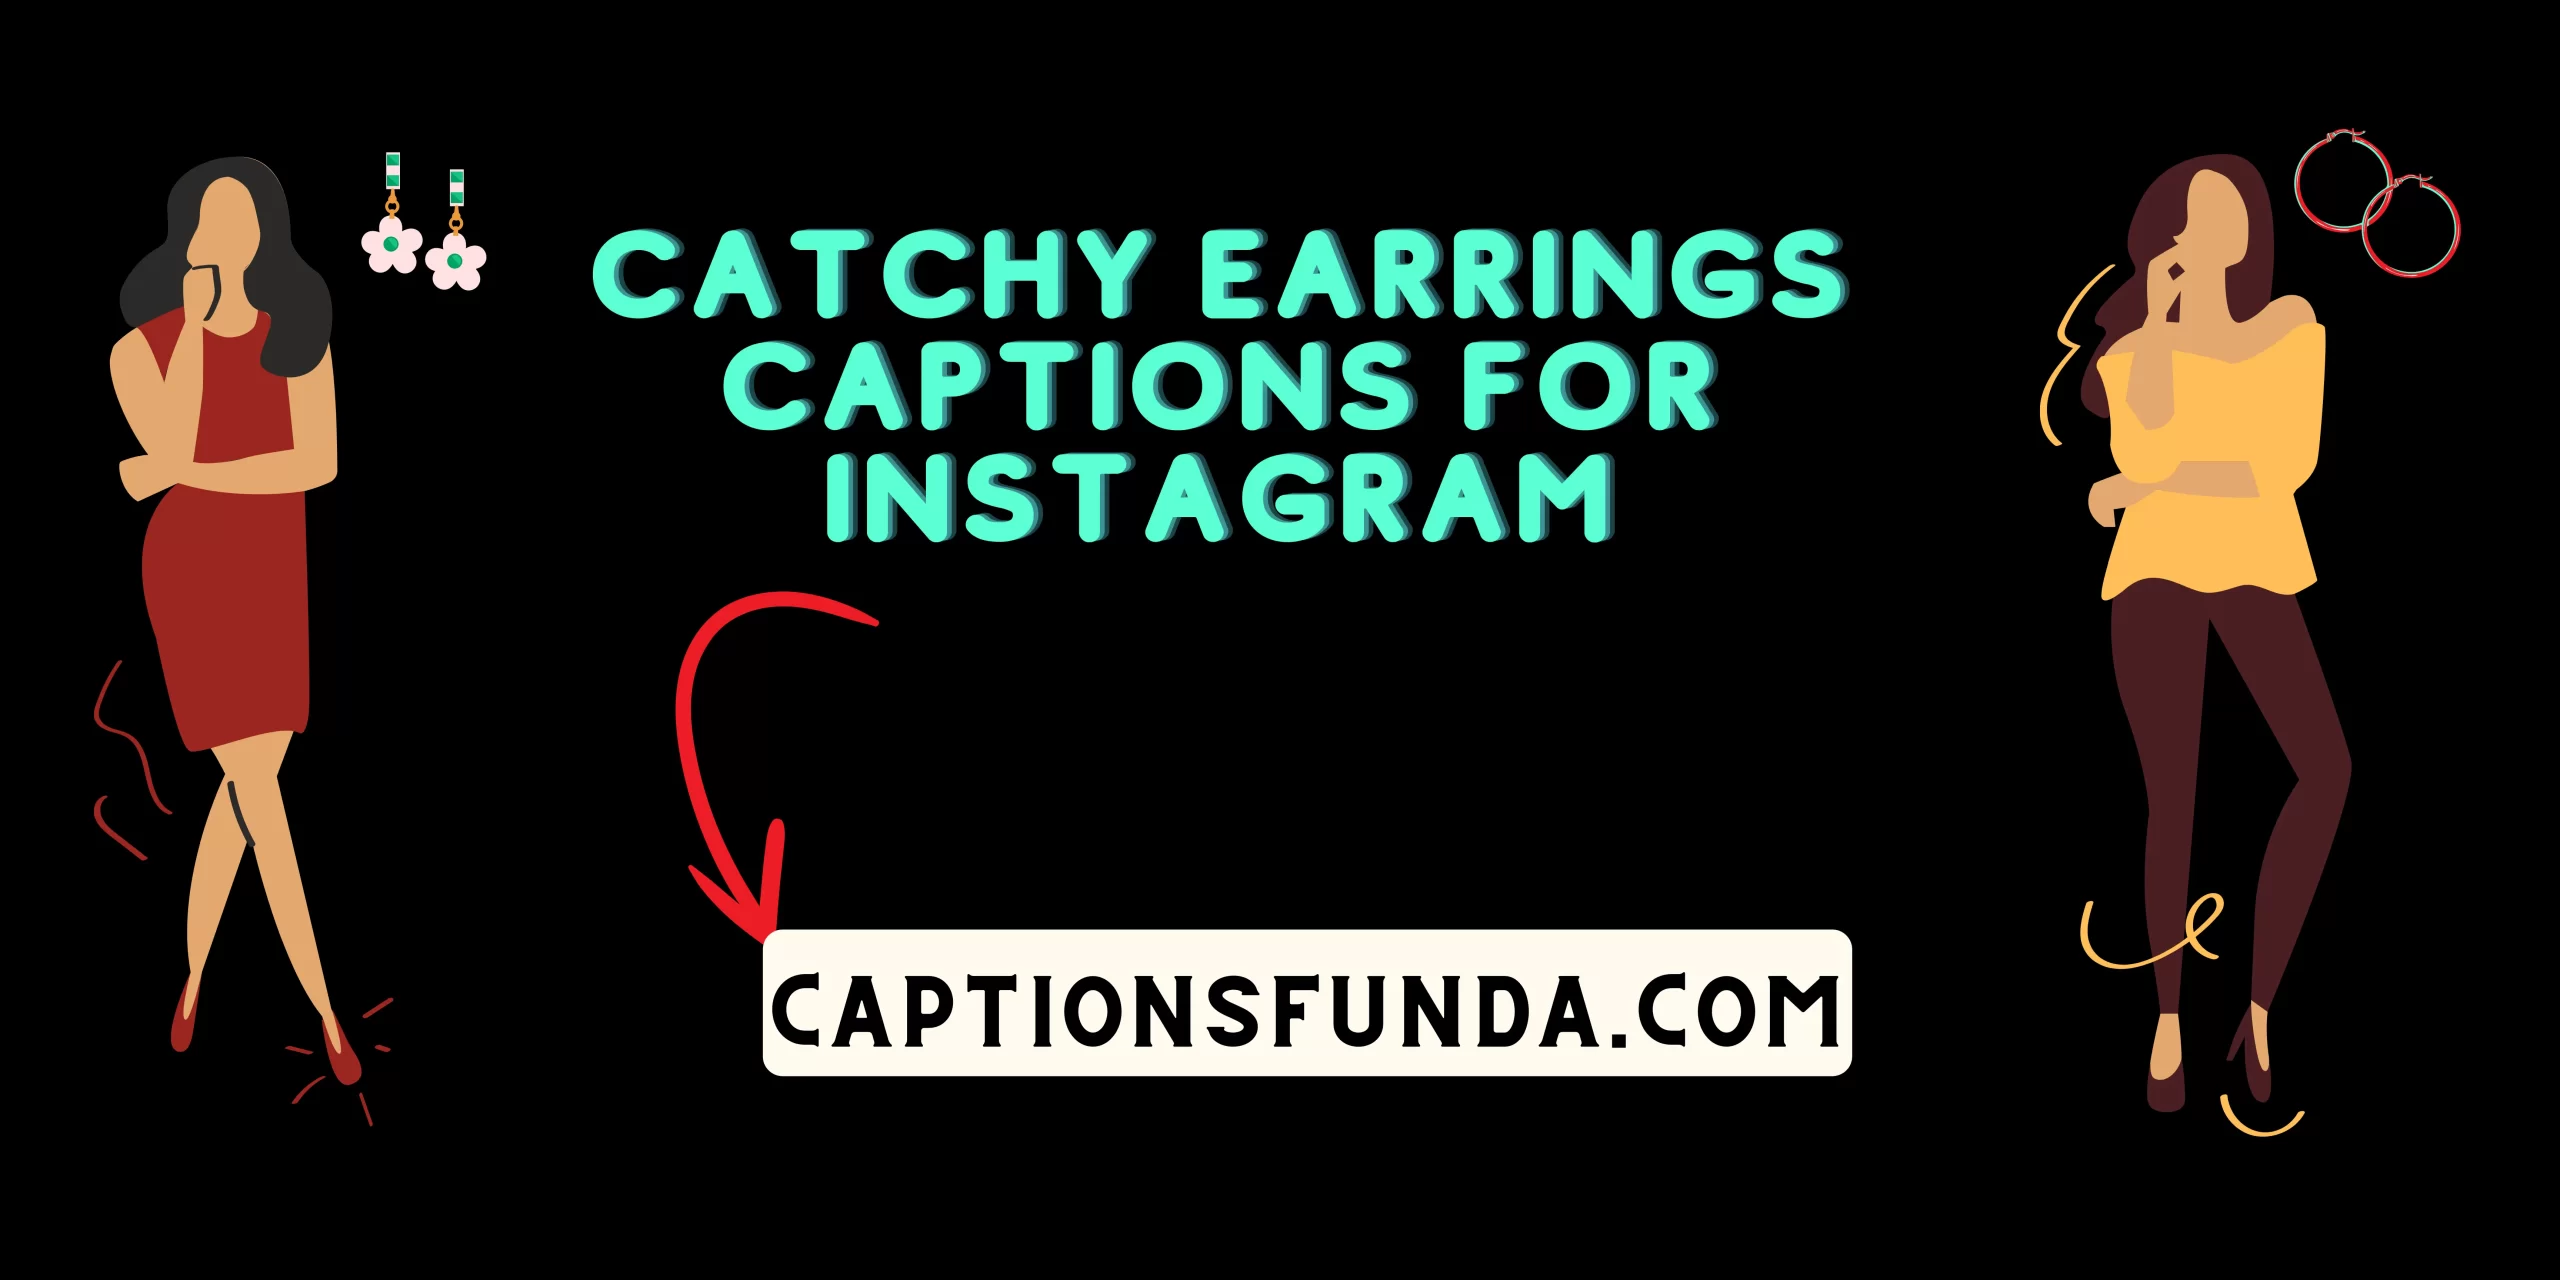 Catchy Earrings Captions for Instagram by captionsfunda.com